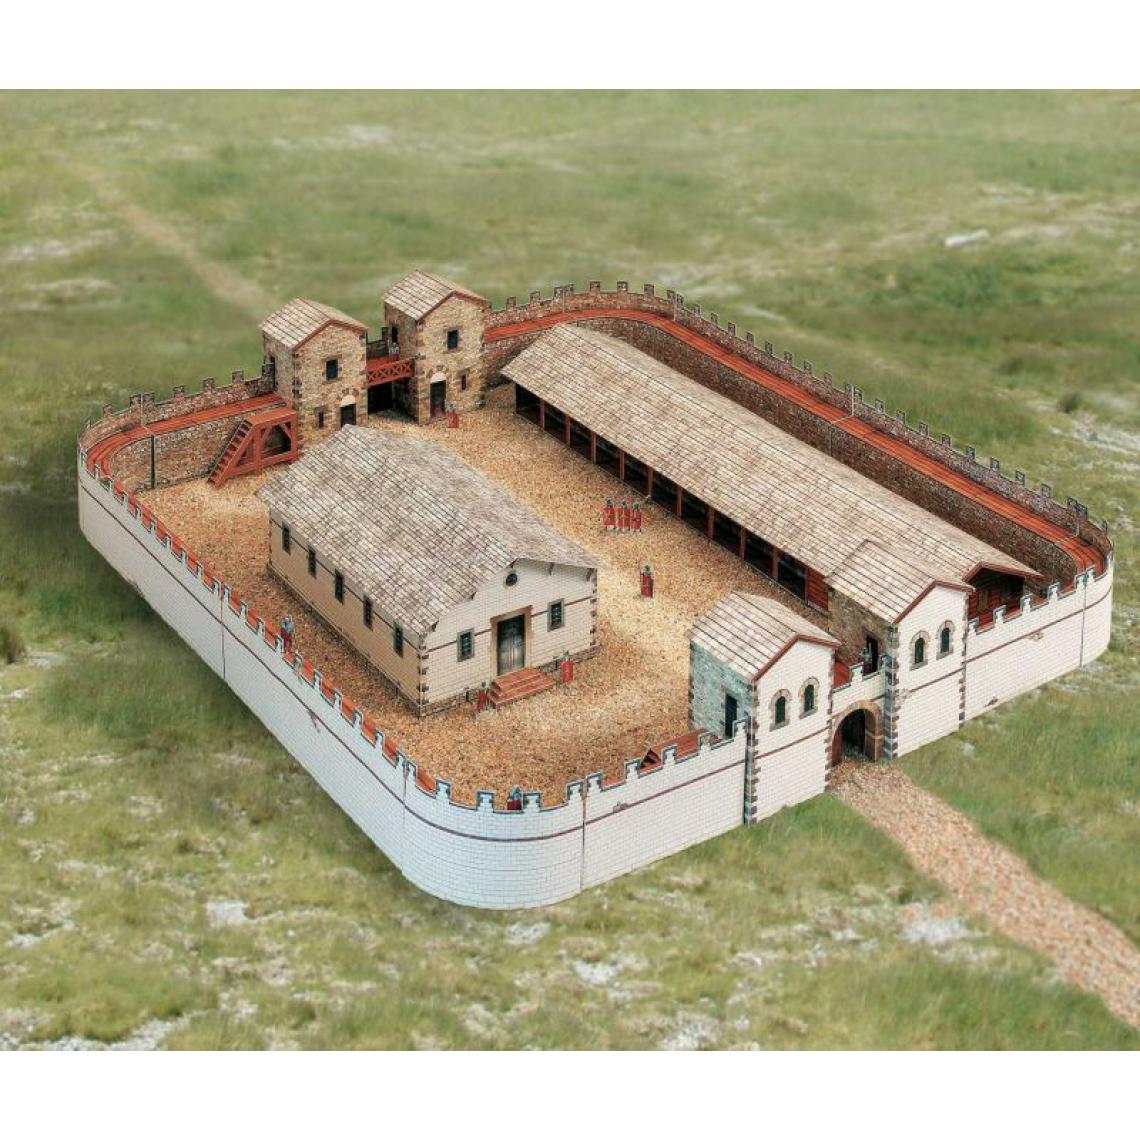 Schreiber-Bogen - Fort romain - Accessoires maquettes